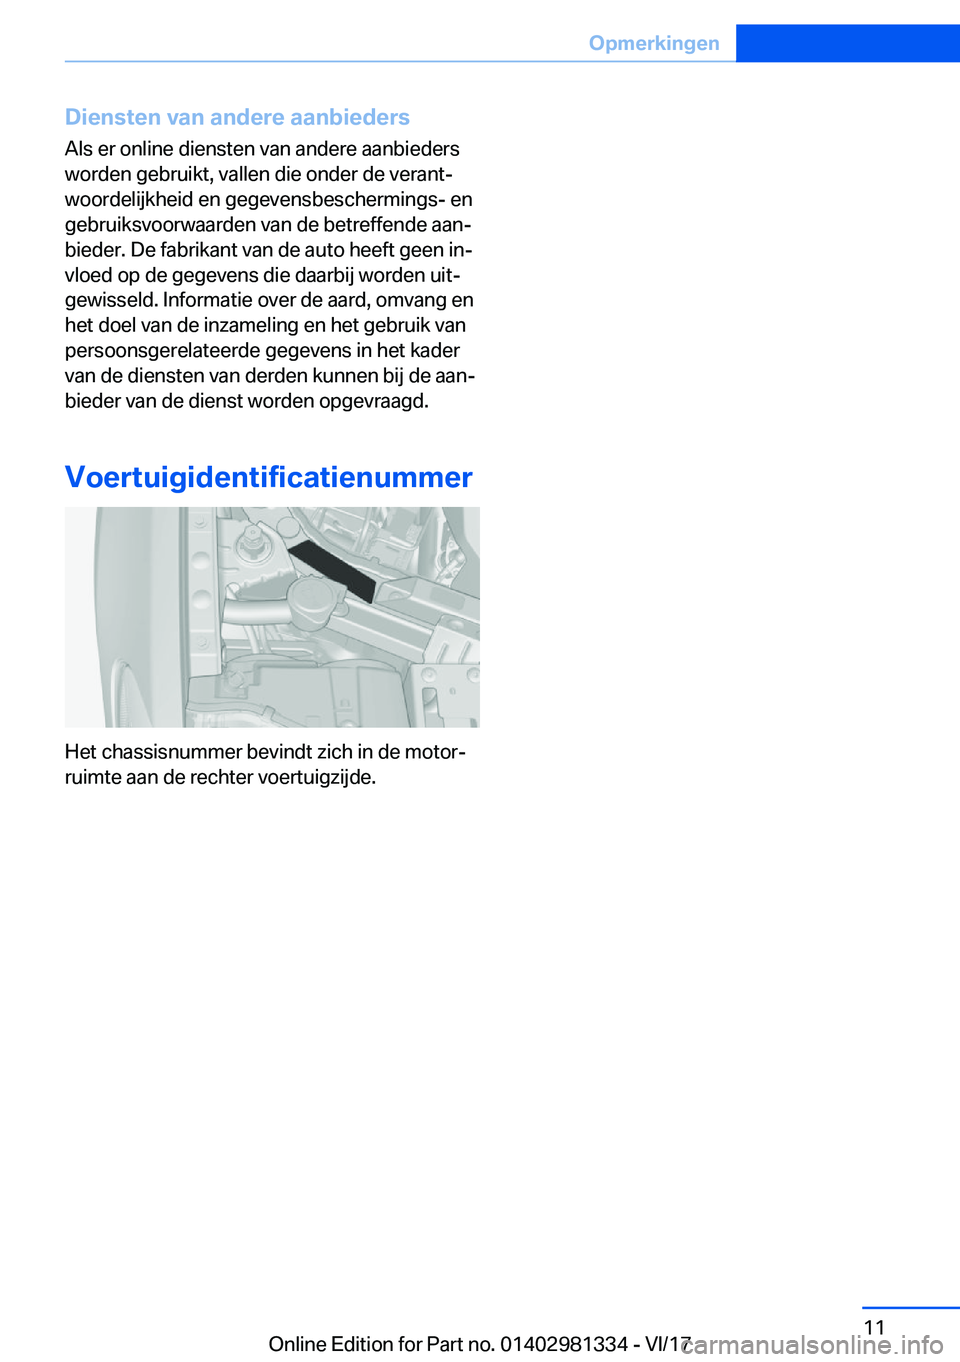 BMW X4 2018  Instructieboekjes (in Dutch) �D�i�e�n�s�t�e�n��v�a�n��a�n�d�e�r�e��a�a�n�b�i�e�d�e�r�s
�A�l�s� �e�r� �o�n�l�i�n�e� �d�i�e�n�s�t�e�n� �v�a�n� �a�n�d�e�r�e� �a�a�n�b�i�e�d�e�r�s �w�o�r�d�e�n� �g�e�b�r�u�i�k�t�,� �v�a�l�l�e�n� �d